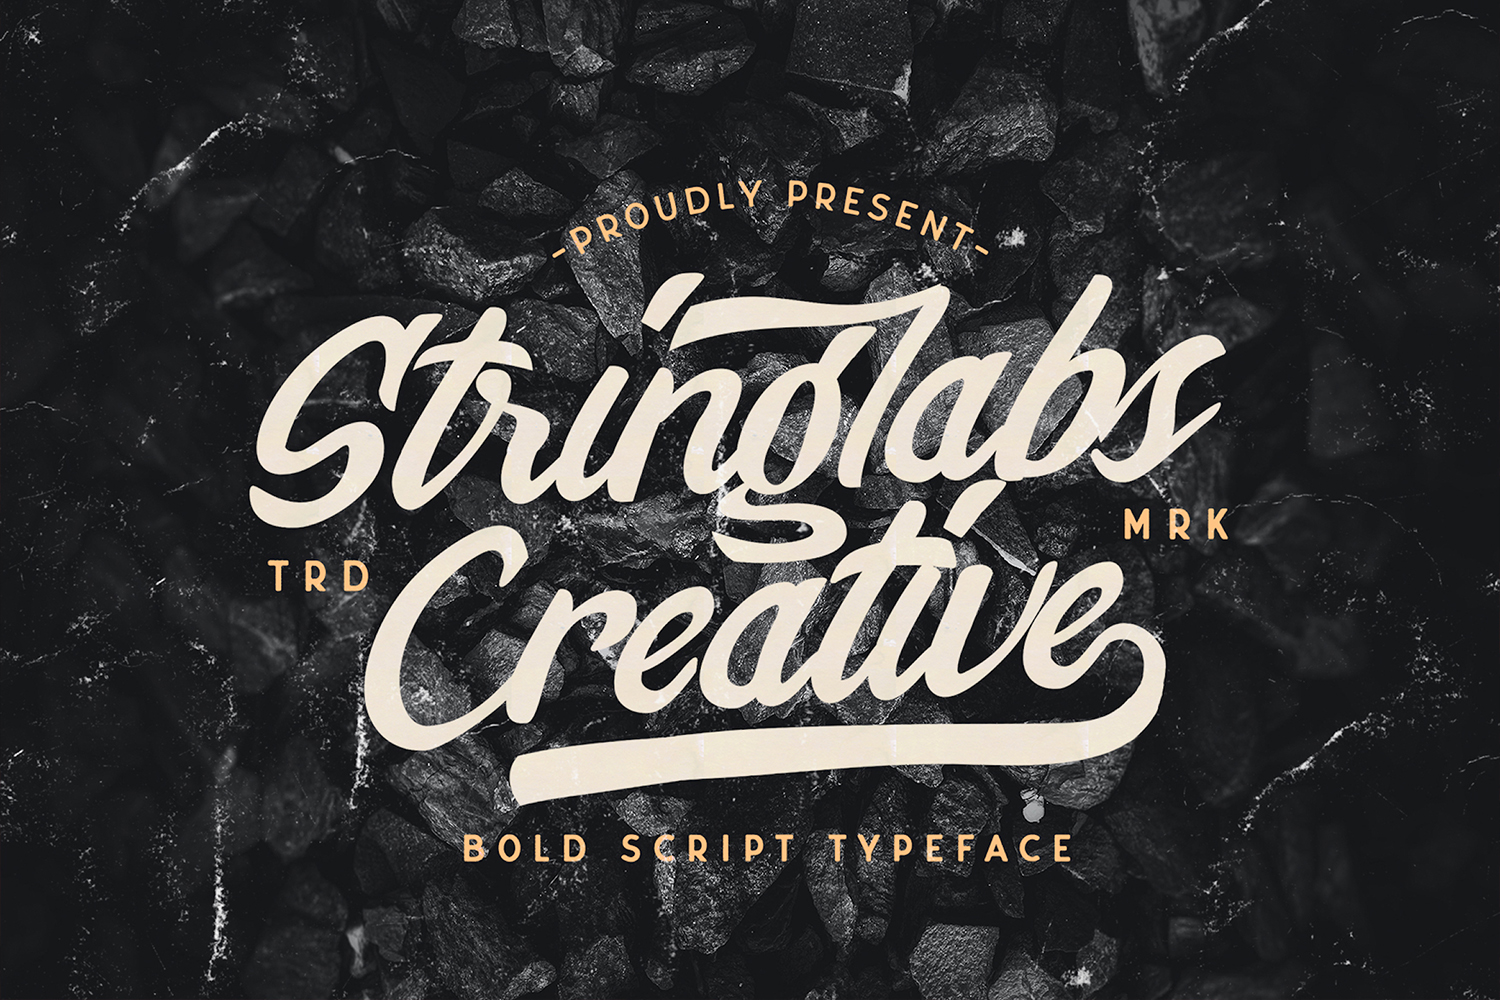 Stringlabs Creative Free Font